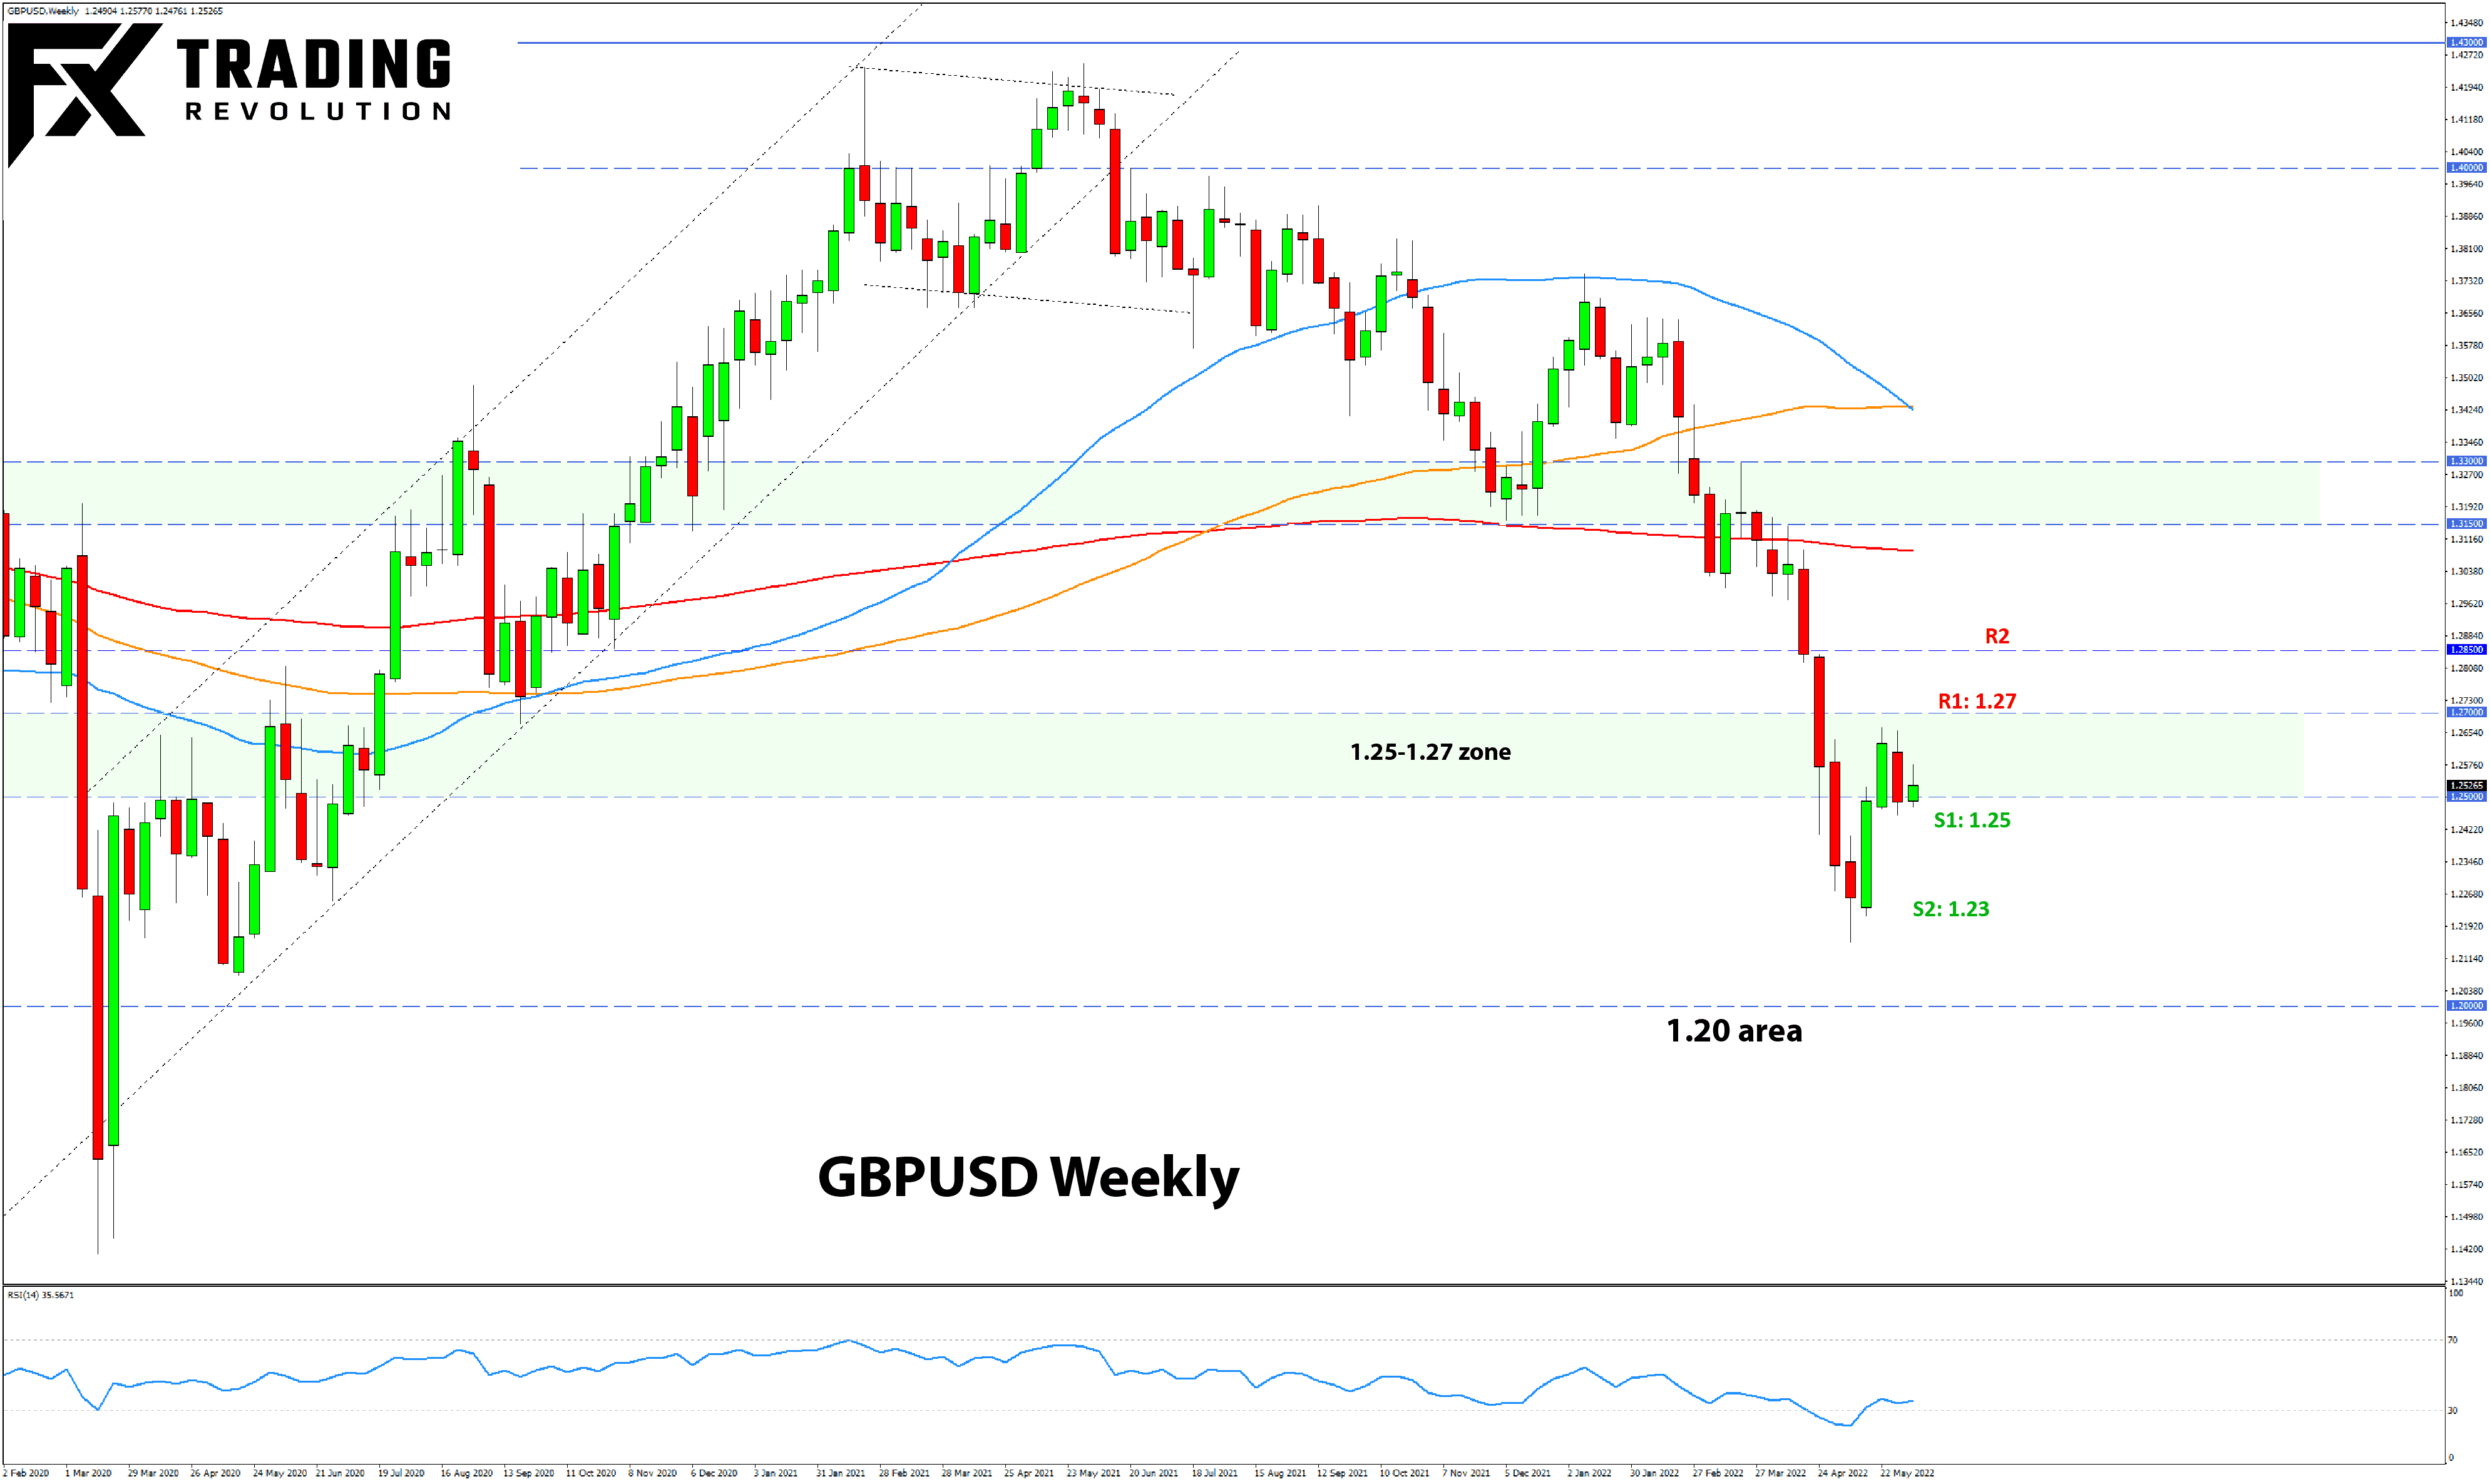 GBPUSD weekly timeframe analysis